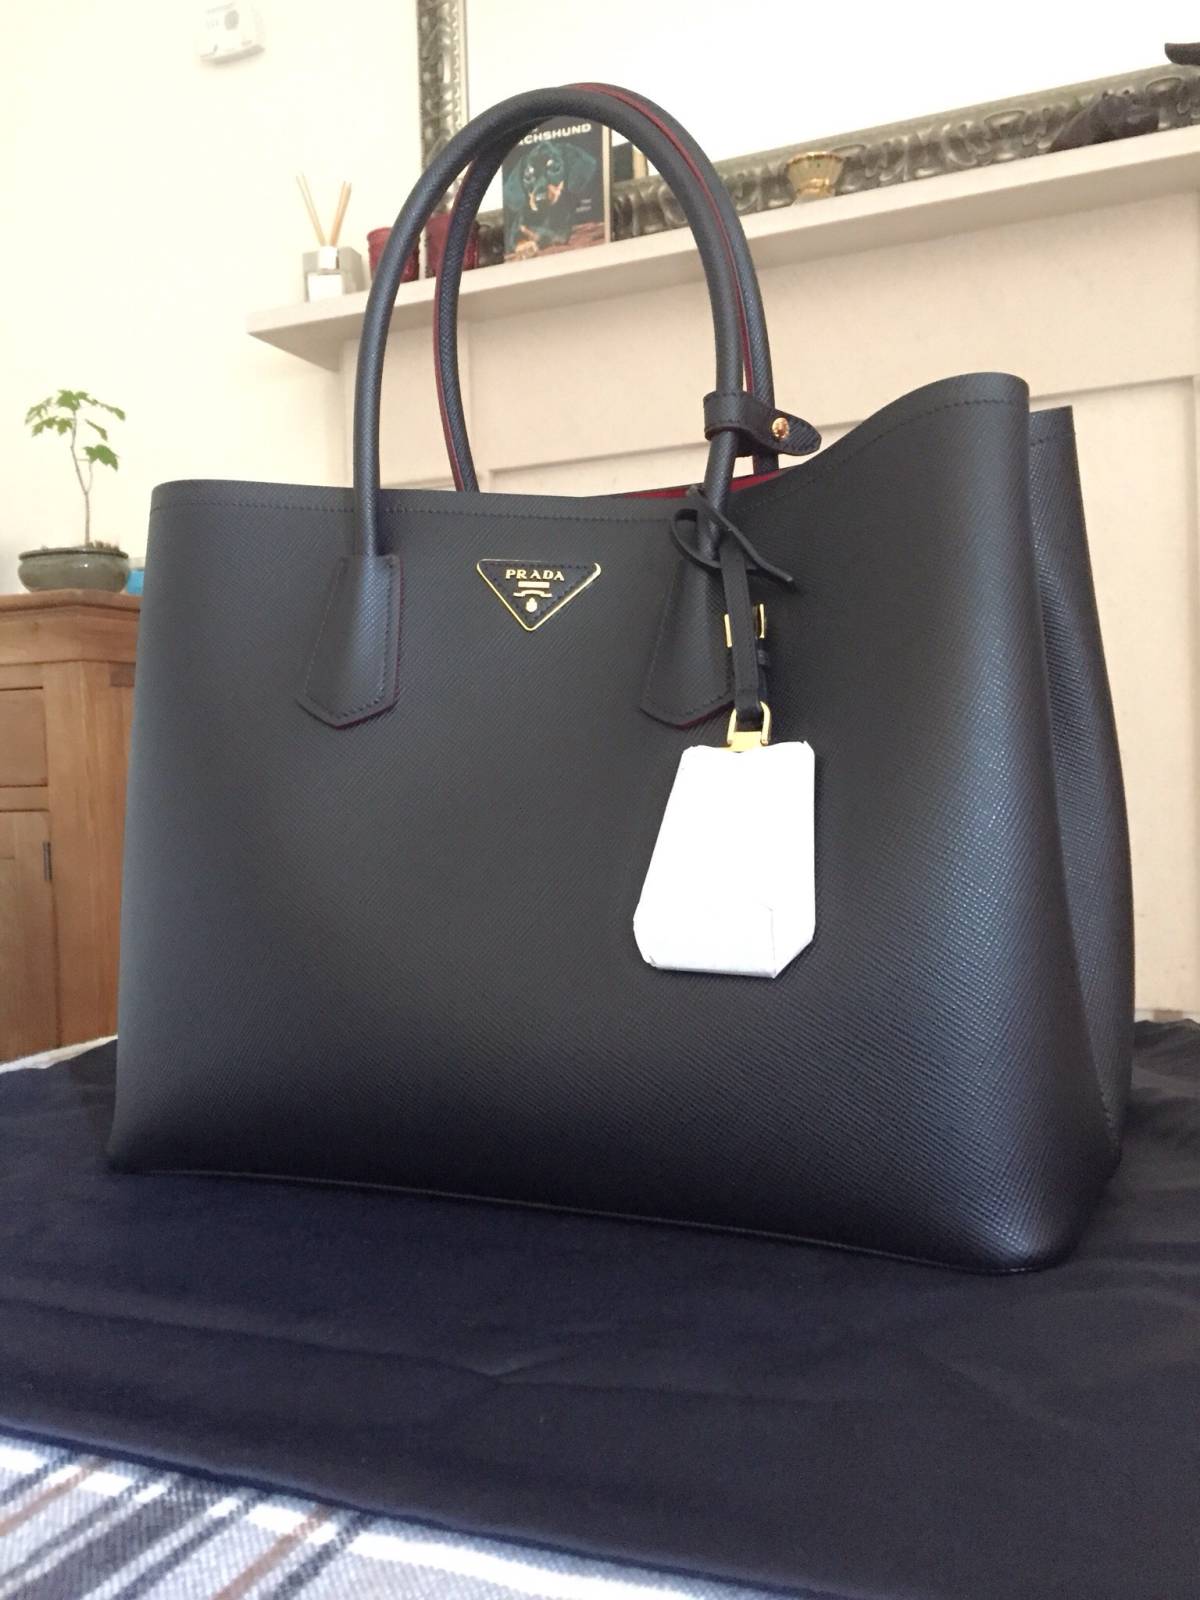 Prada Double Bag: reveal and mini review - Vikky Anna